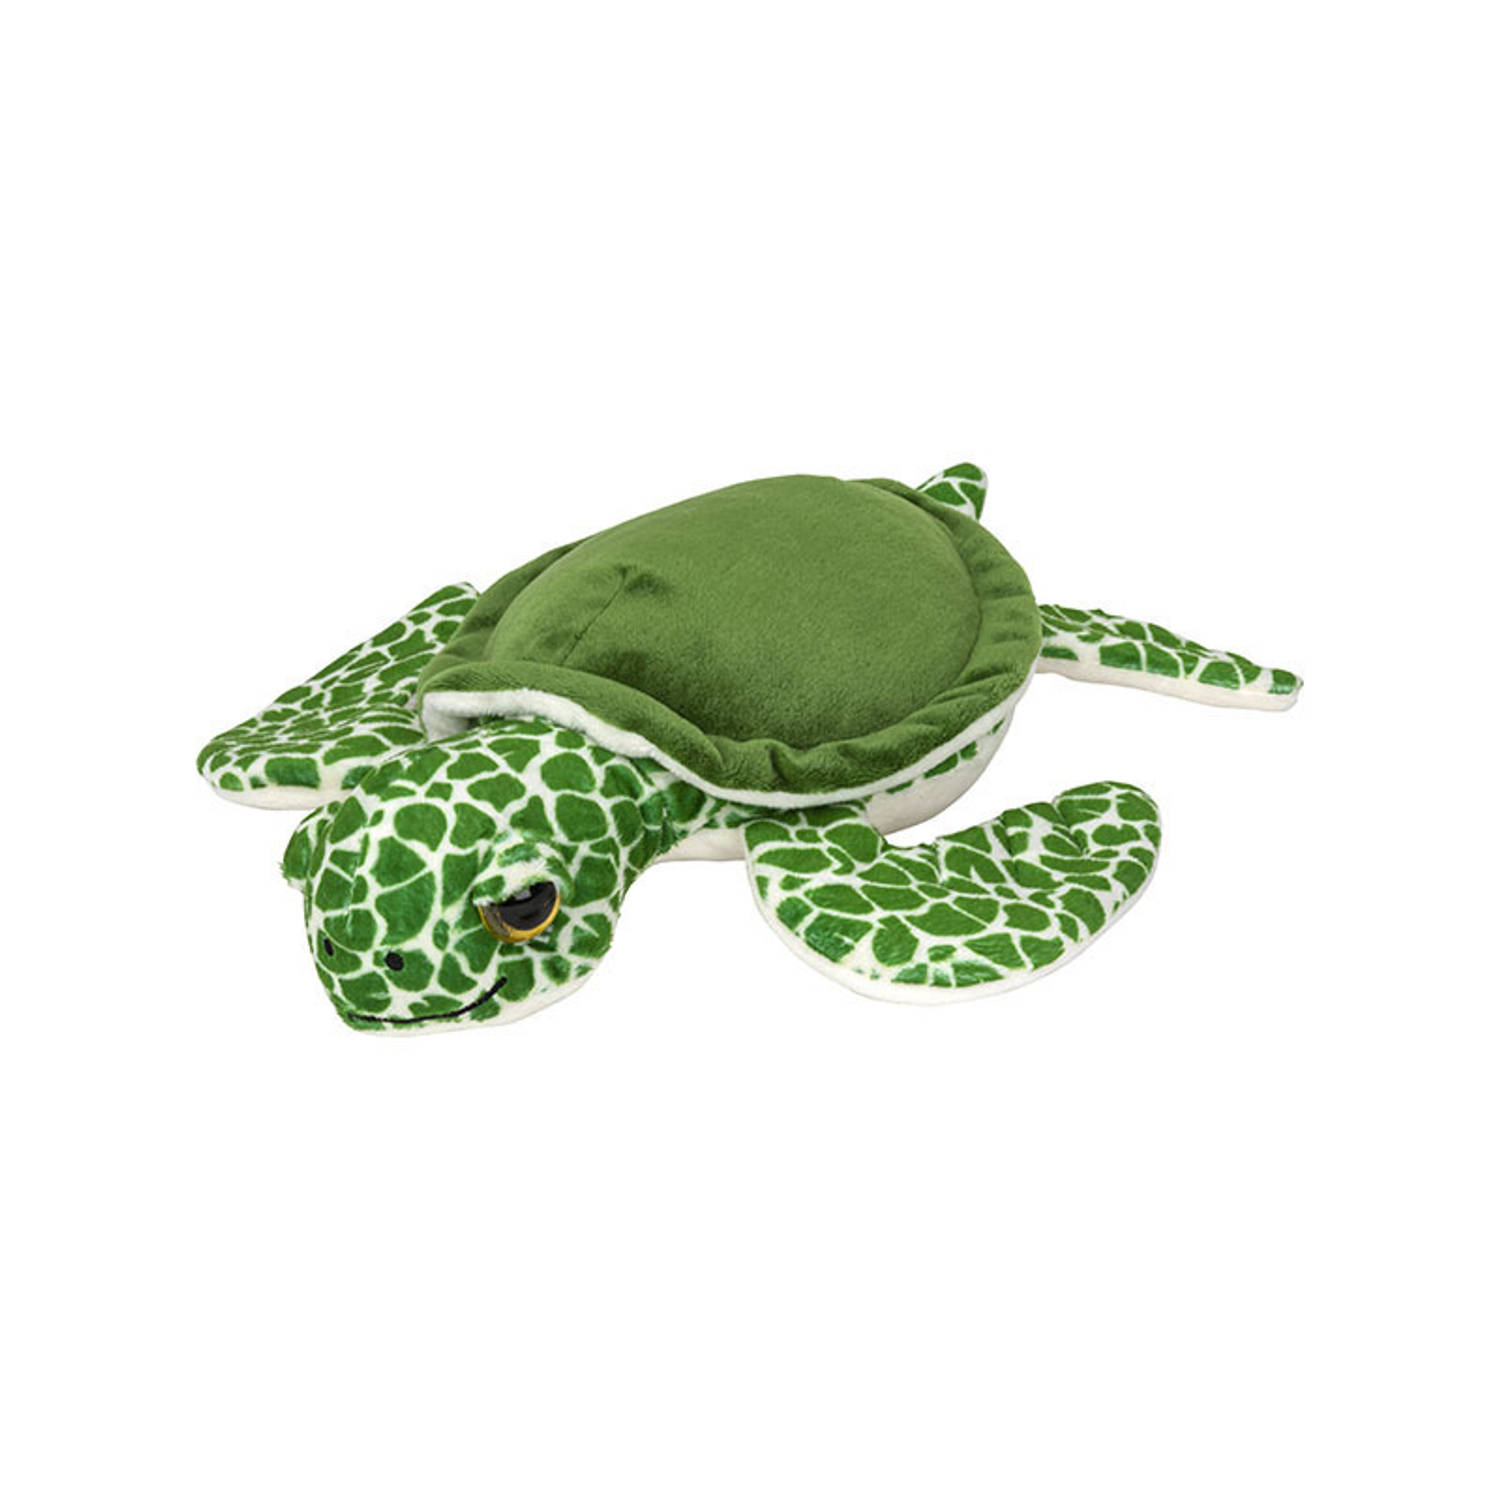 Pluche knuffel zeeschildpad van 30 cm - Speelgoed knuffeldieren schildpadden